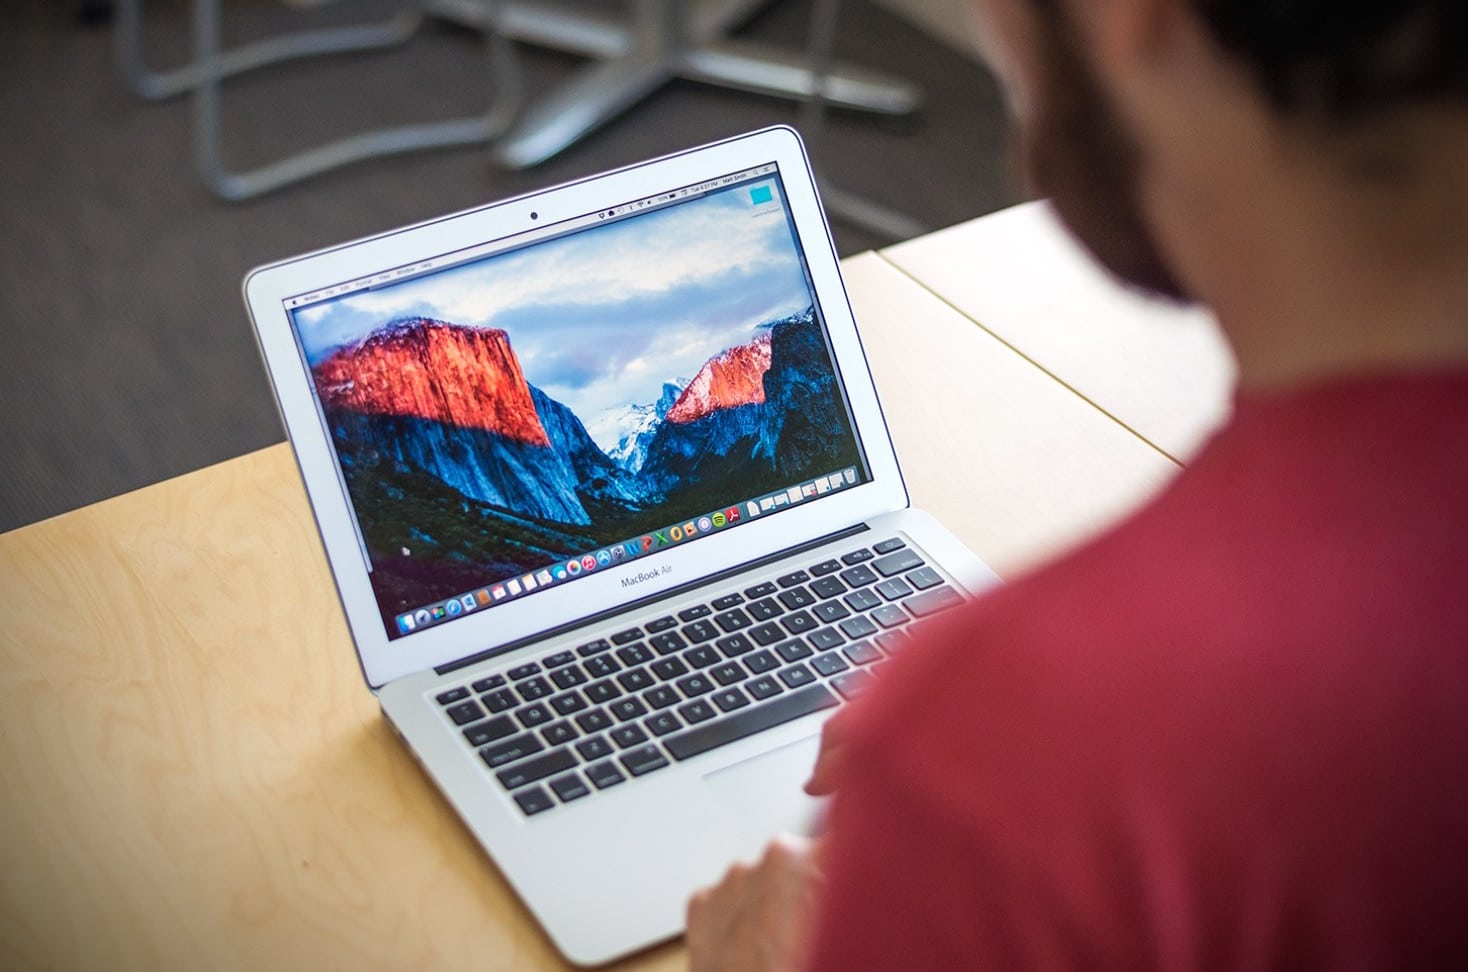 running apple diagnostics test mac pro